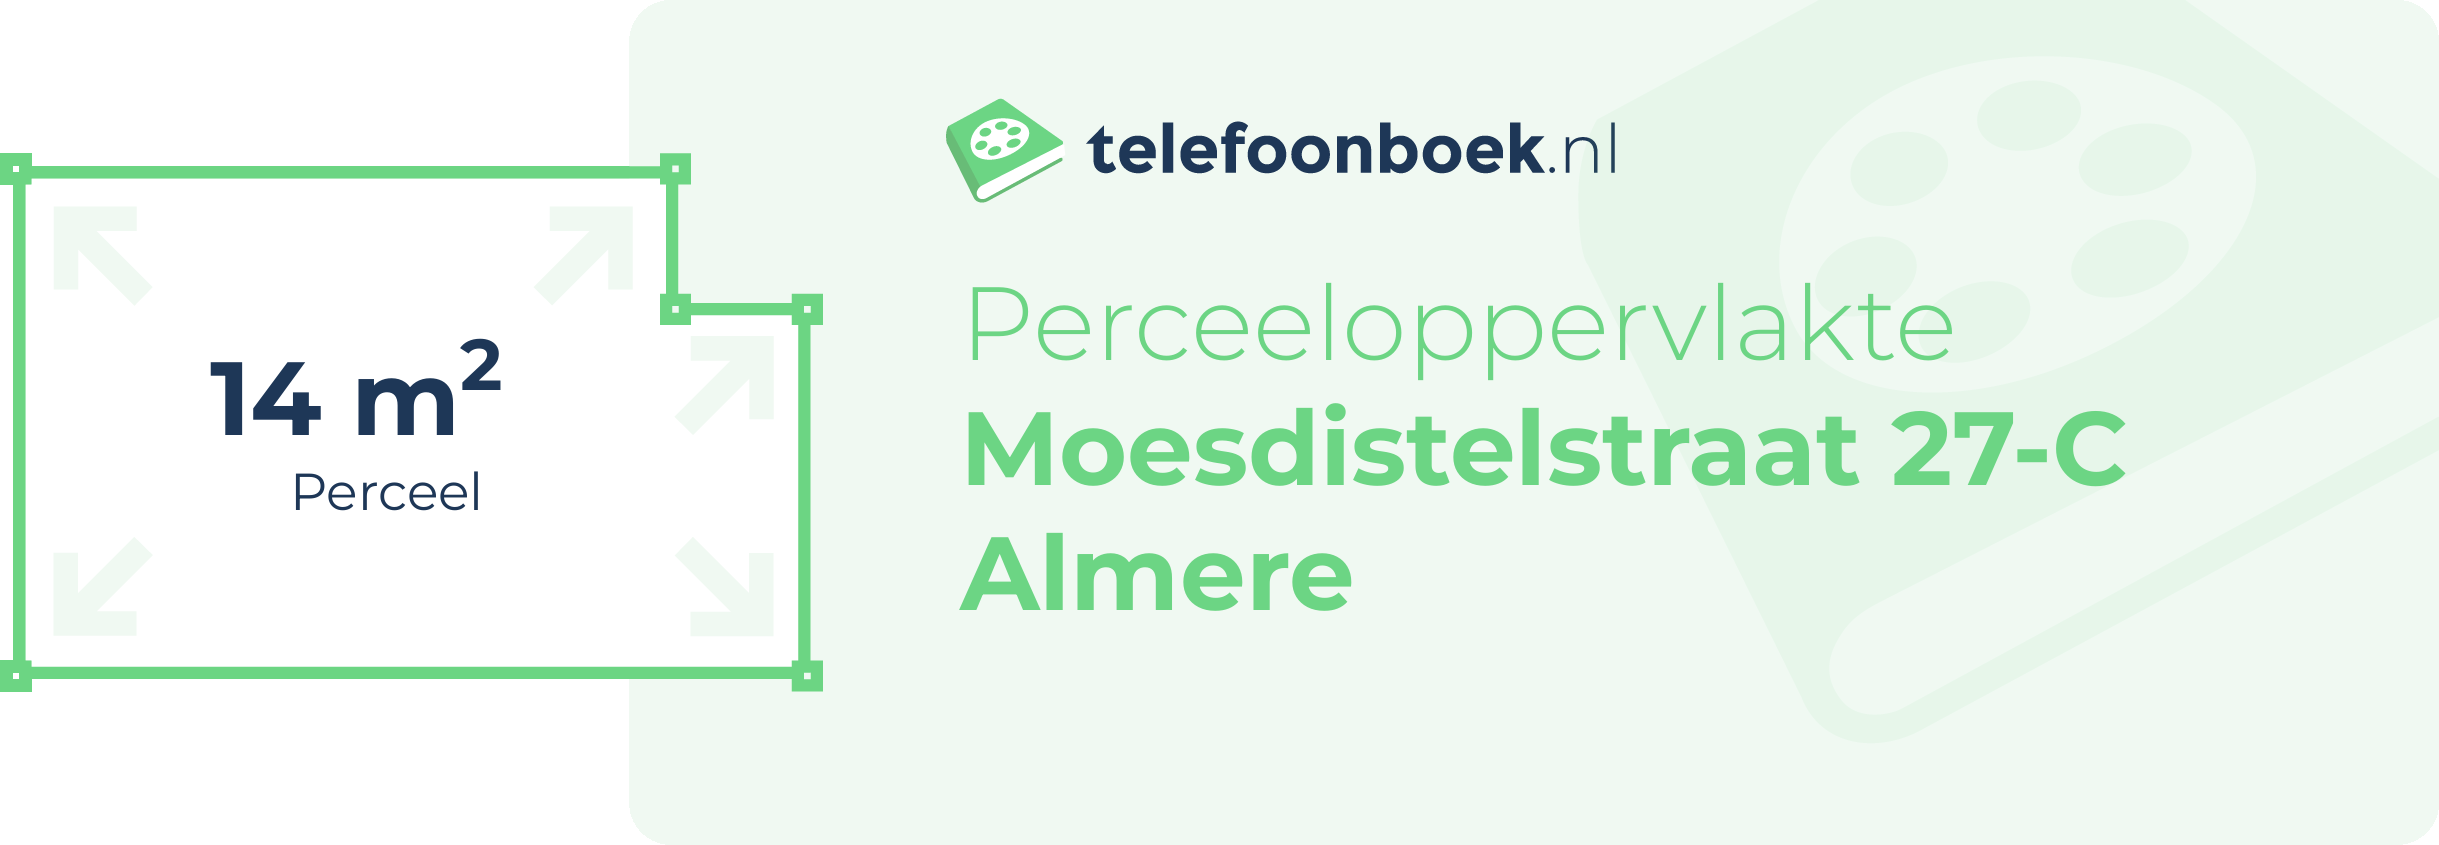 Perceeloppervlakte Moesdistelstraat 27-C Almere